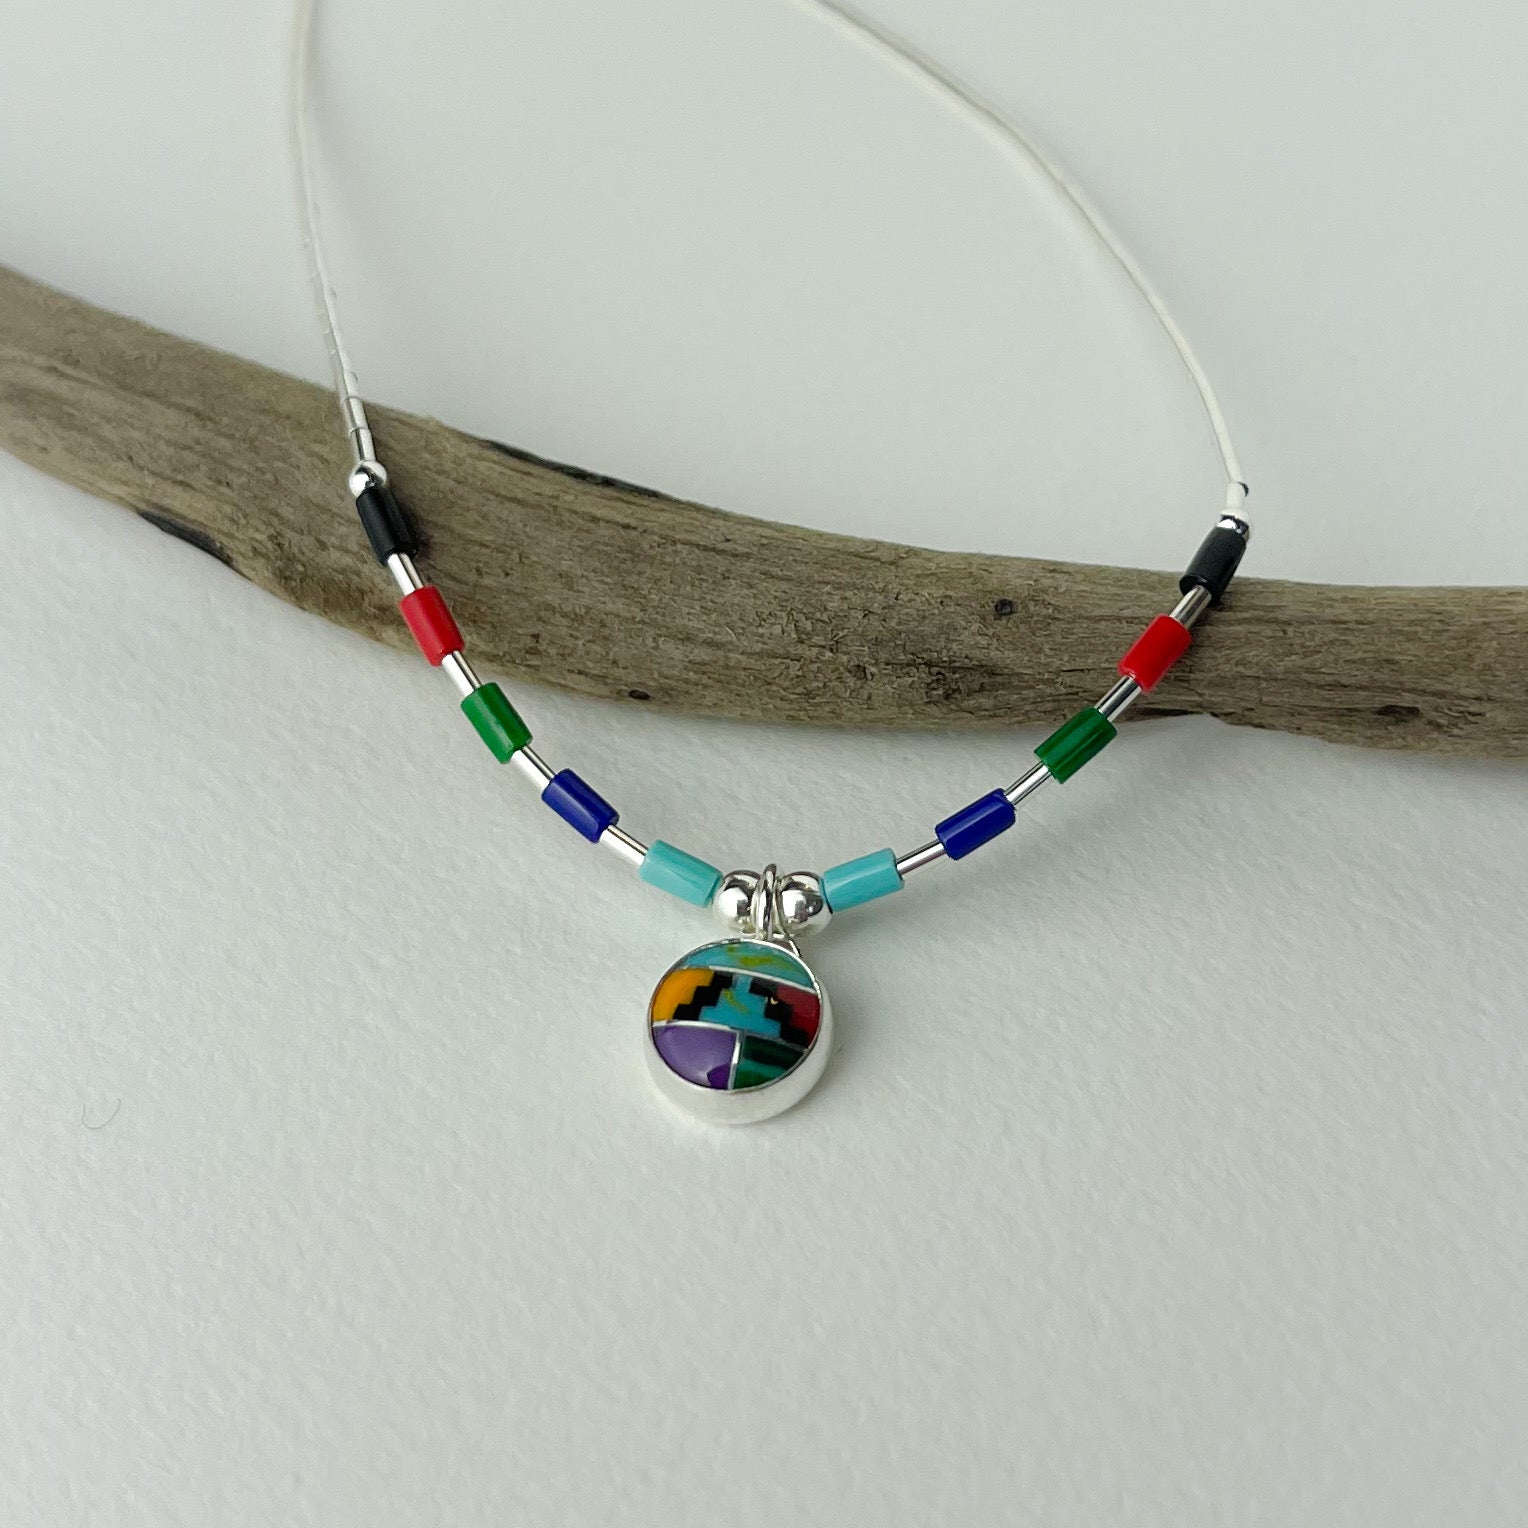 Round Aztec Drop Necklace - The Nancy Smillie Shop - Art, Jewellery & Designer Gifts Glasgow